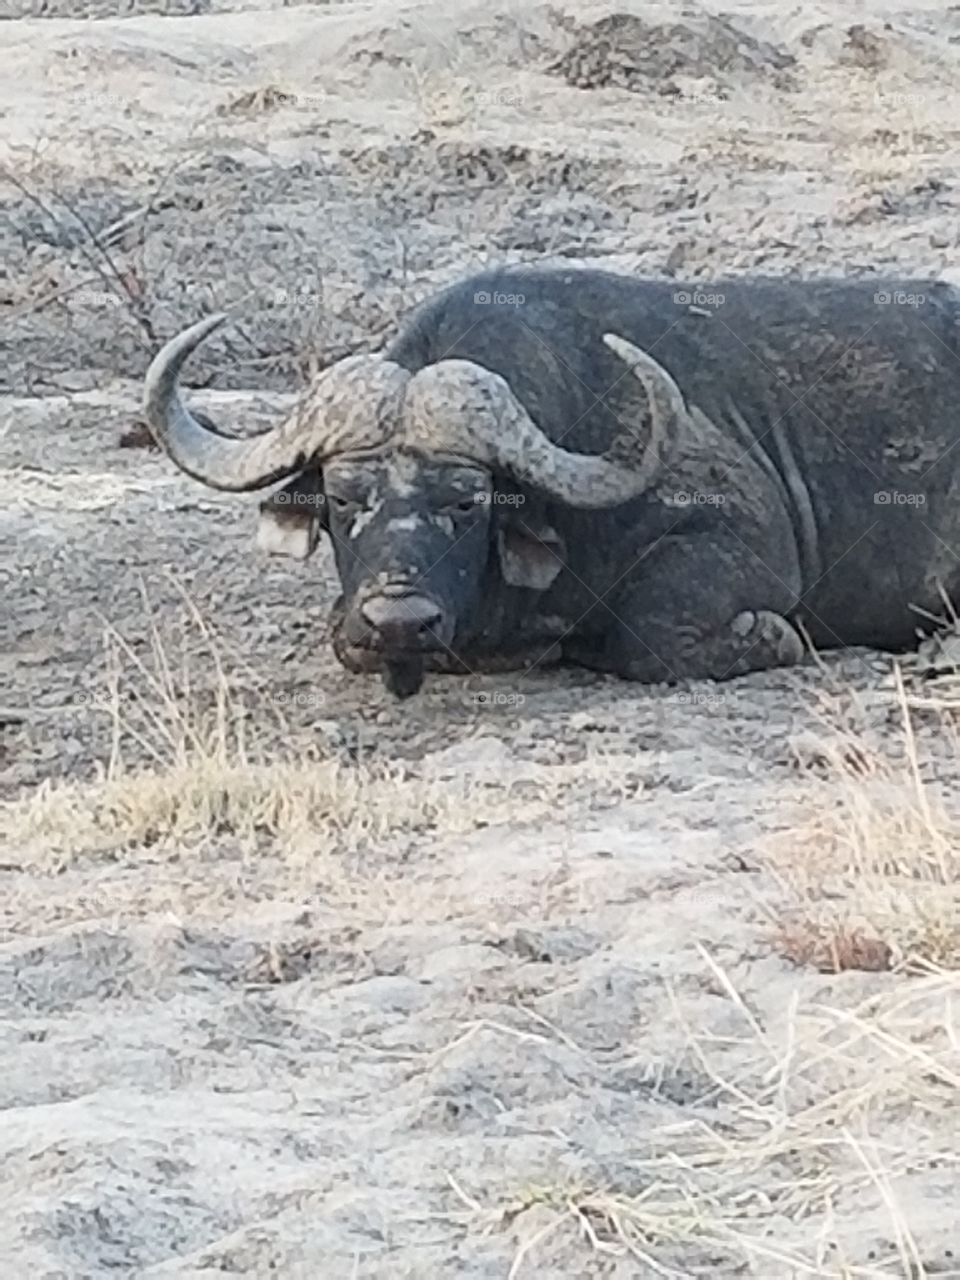 African buffalo chews its cud